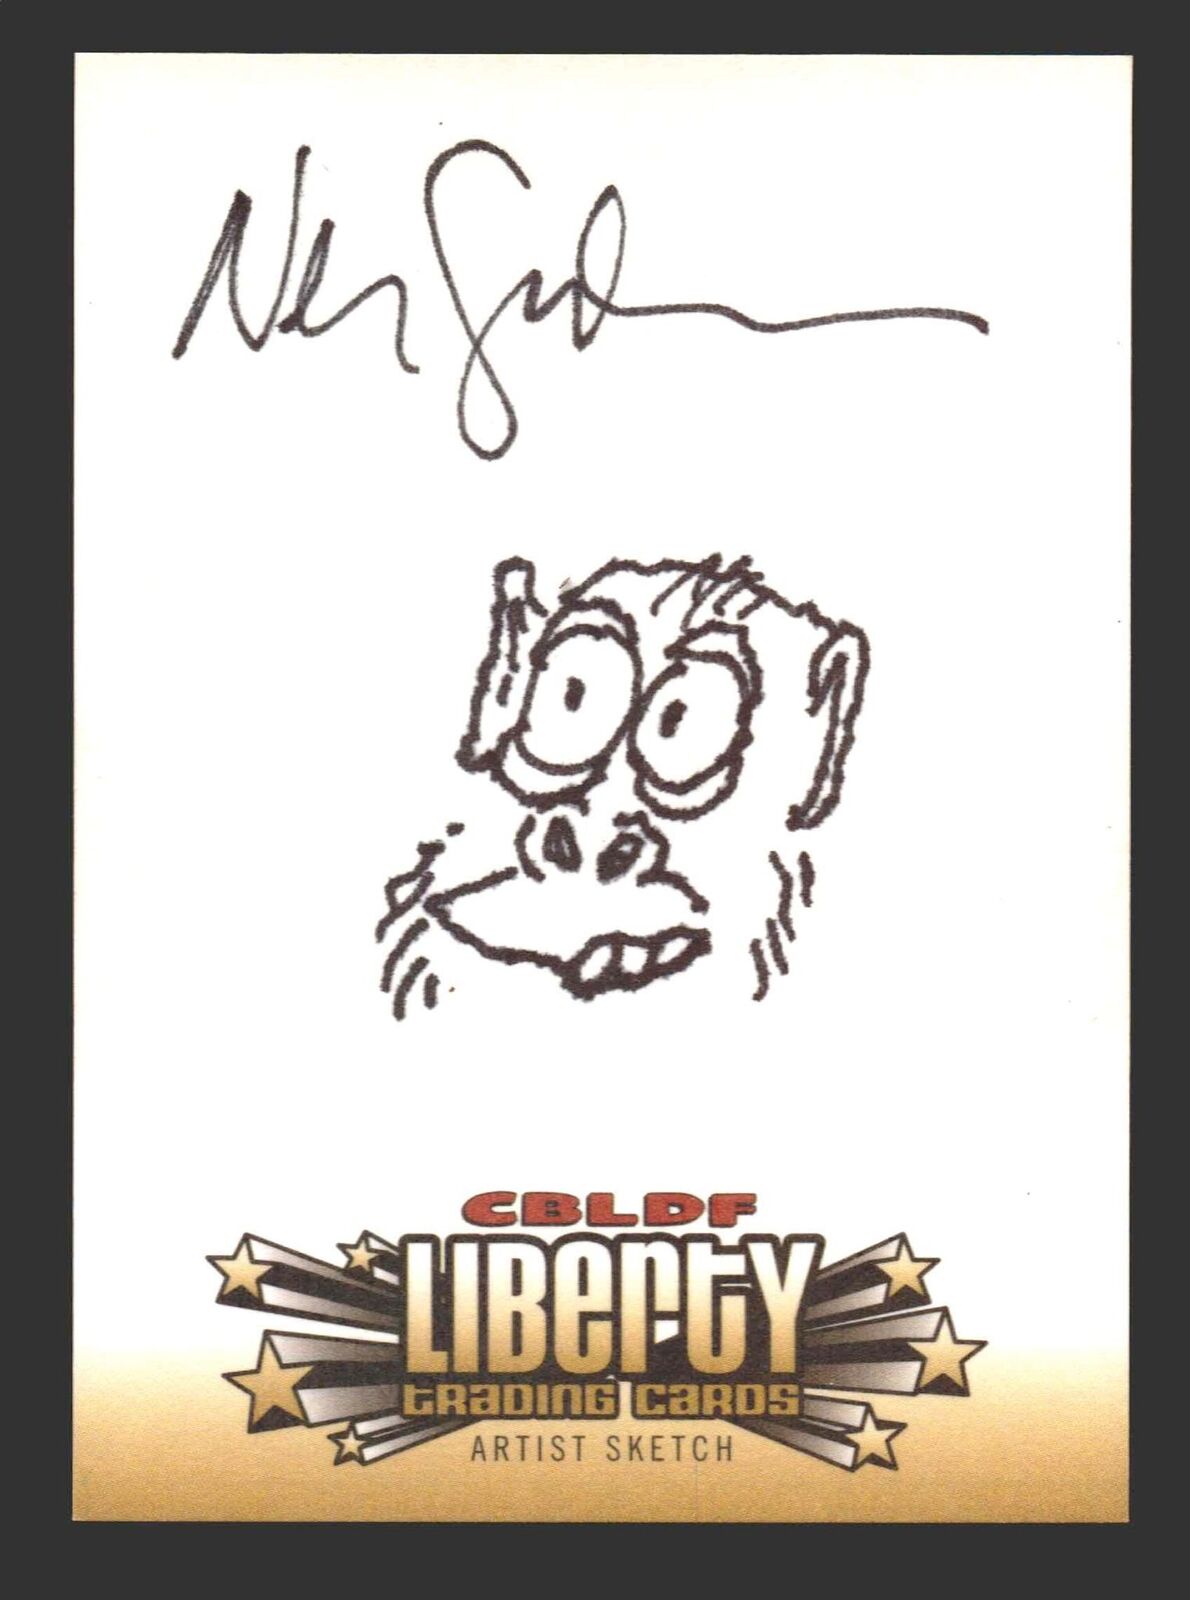 2011 Cryptozoic CBLDF Liberty Artist Sketch Trading Card by Neil Gaiman